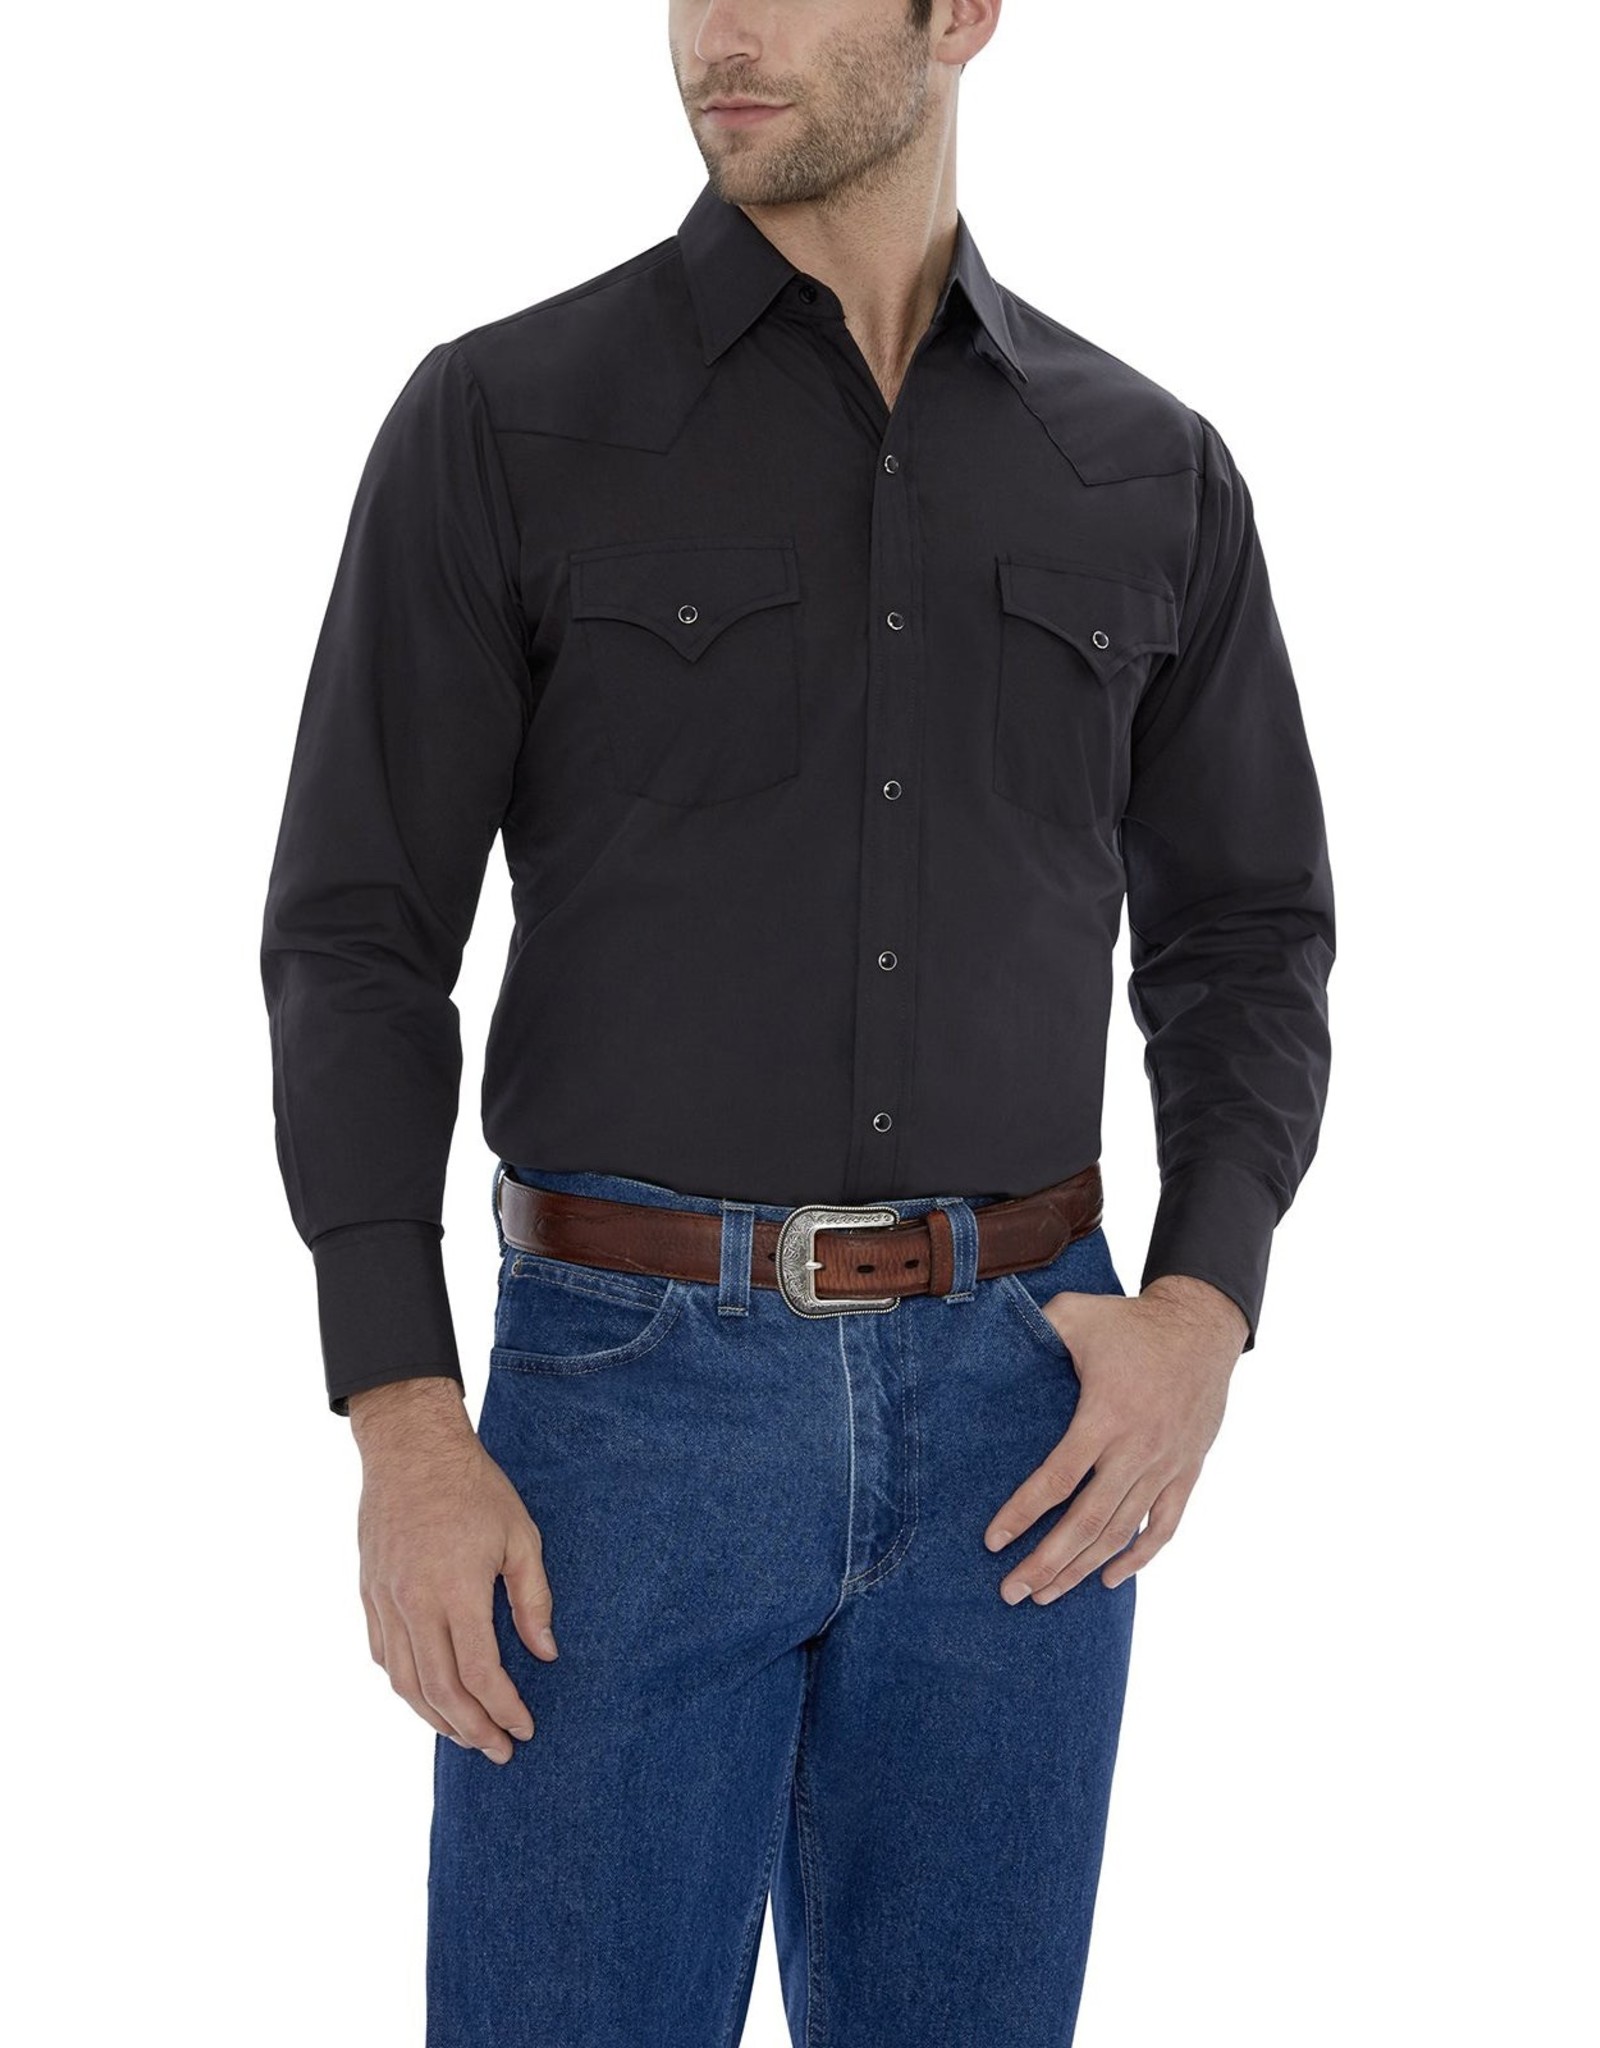 Ely Mens Long Sleeve Shirt in Black Sz. XXL 15201905-89